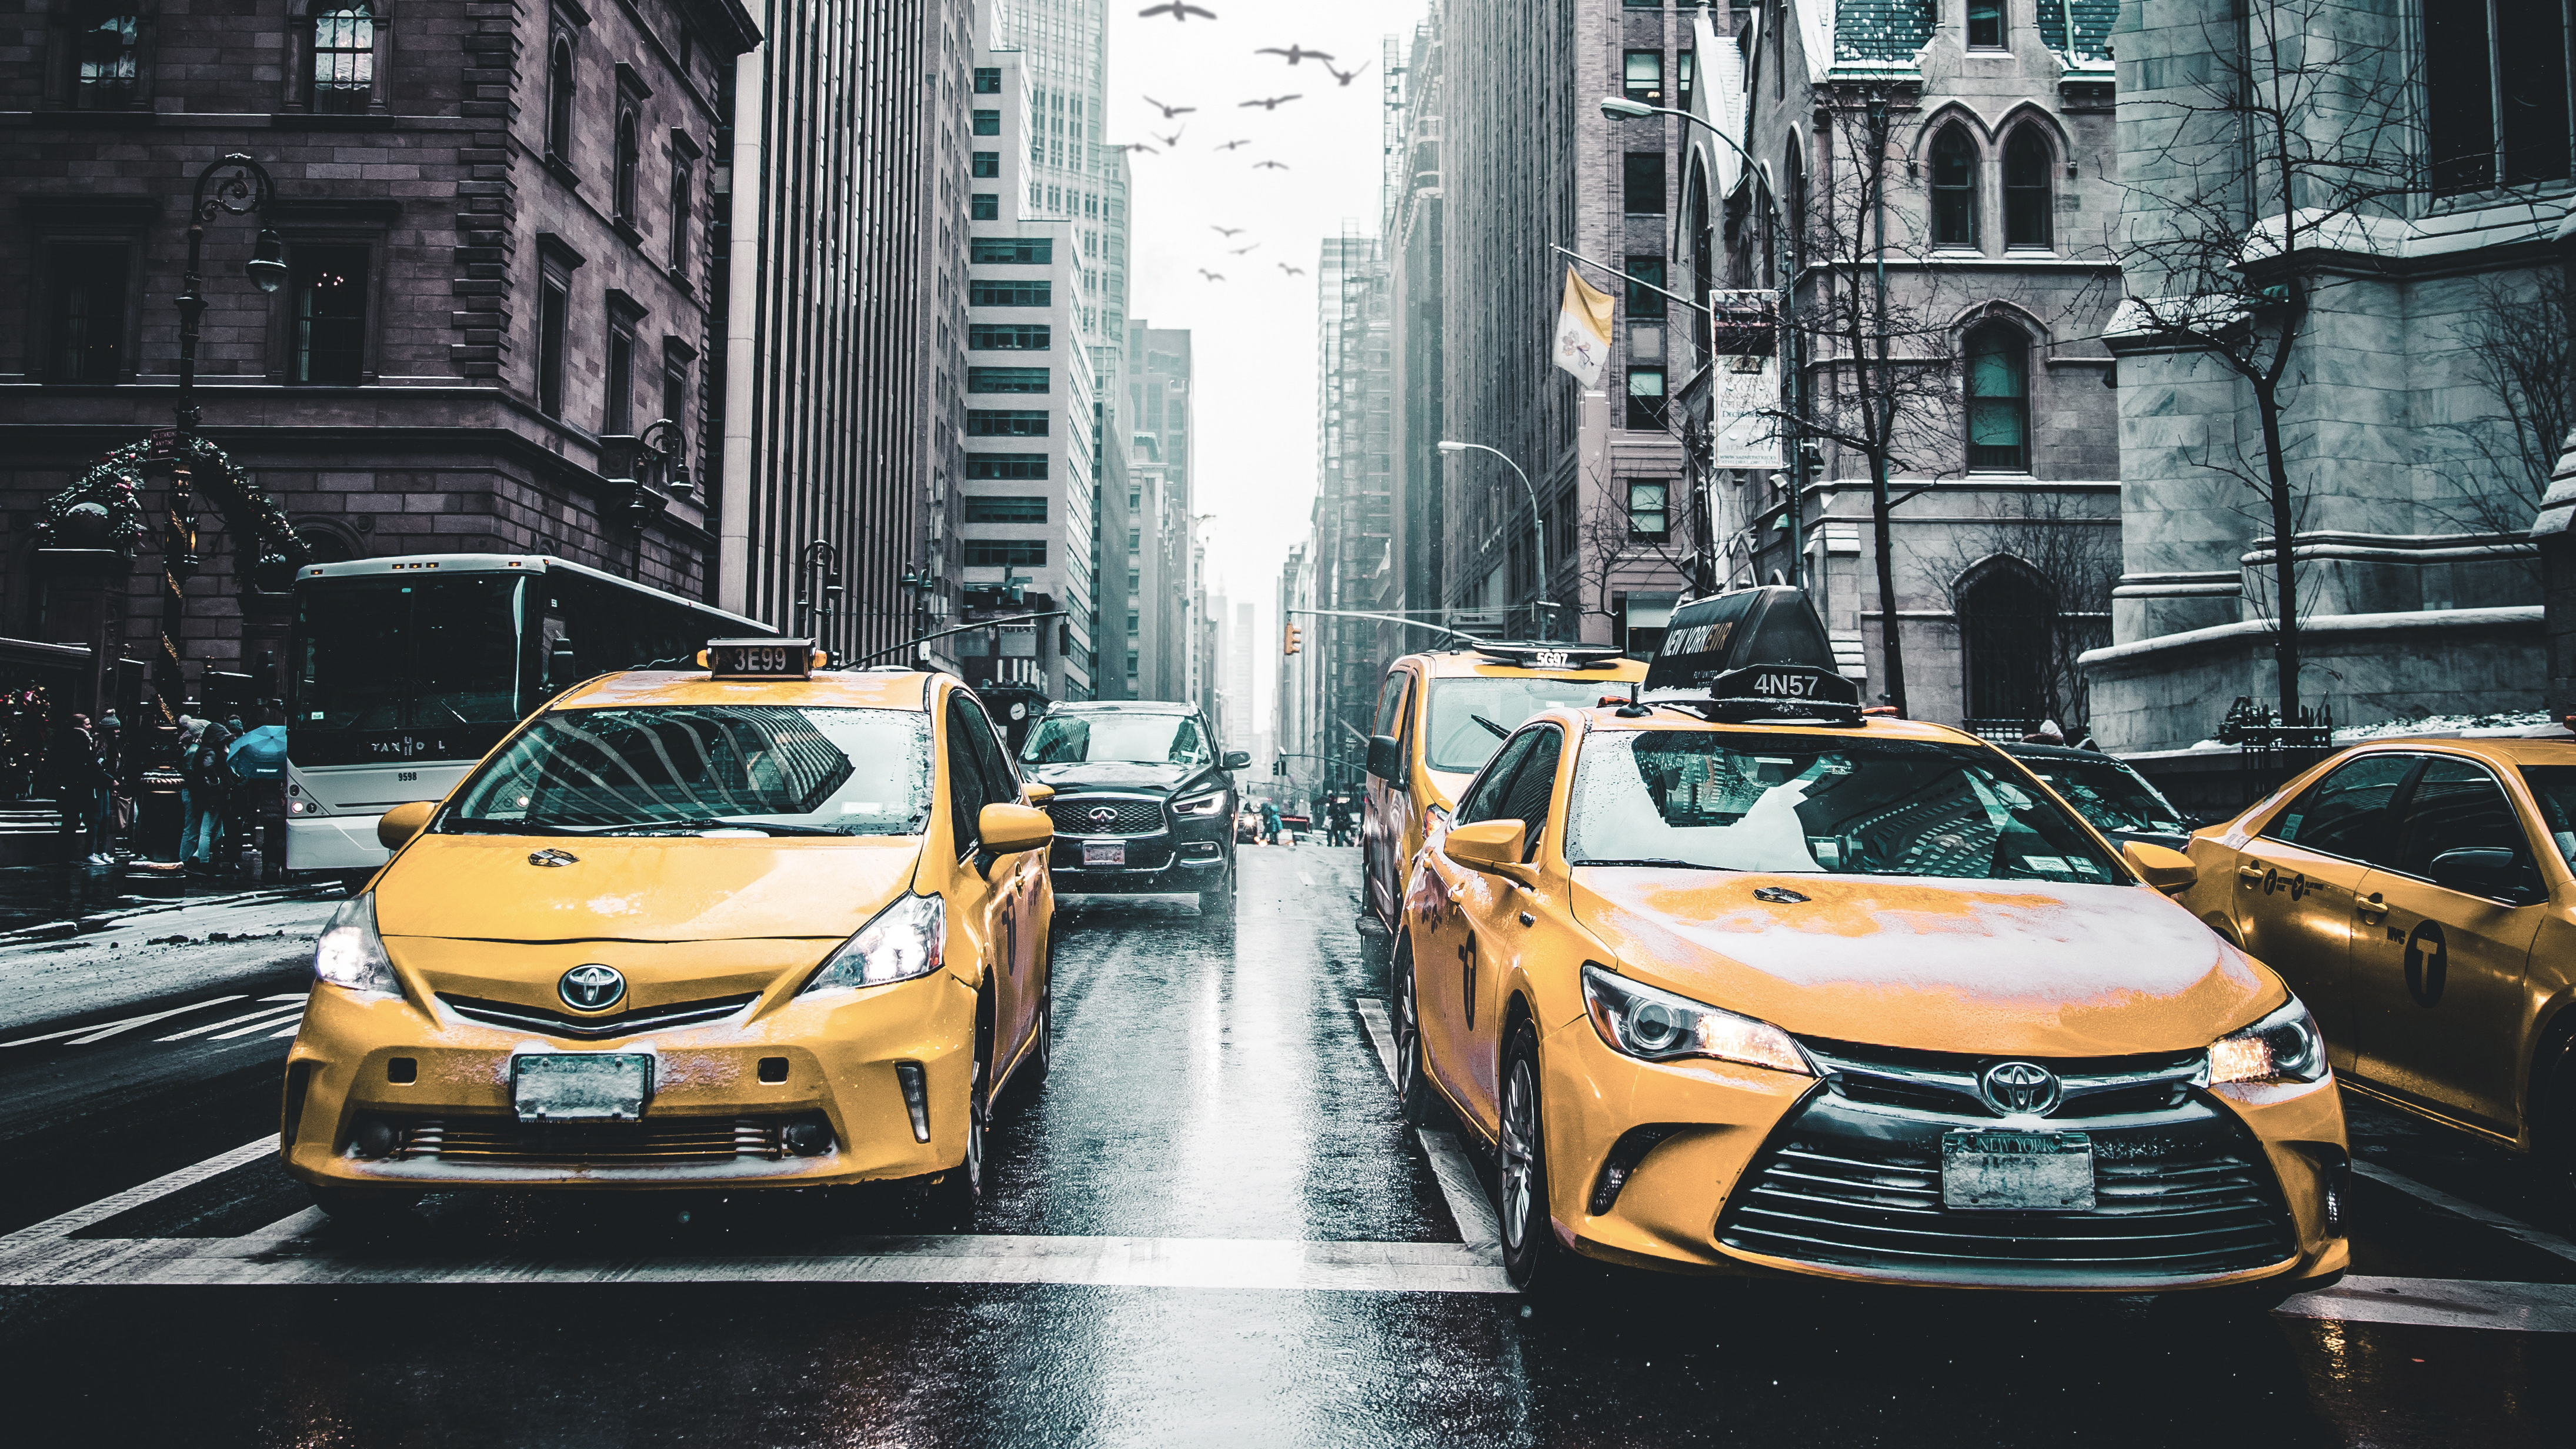 Andre Benz Taxi Yellow Cab Street New York City Birds Urban Street View 4380x2464